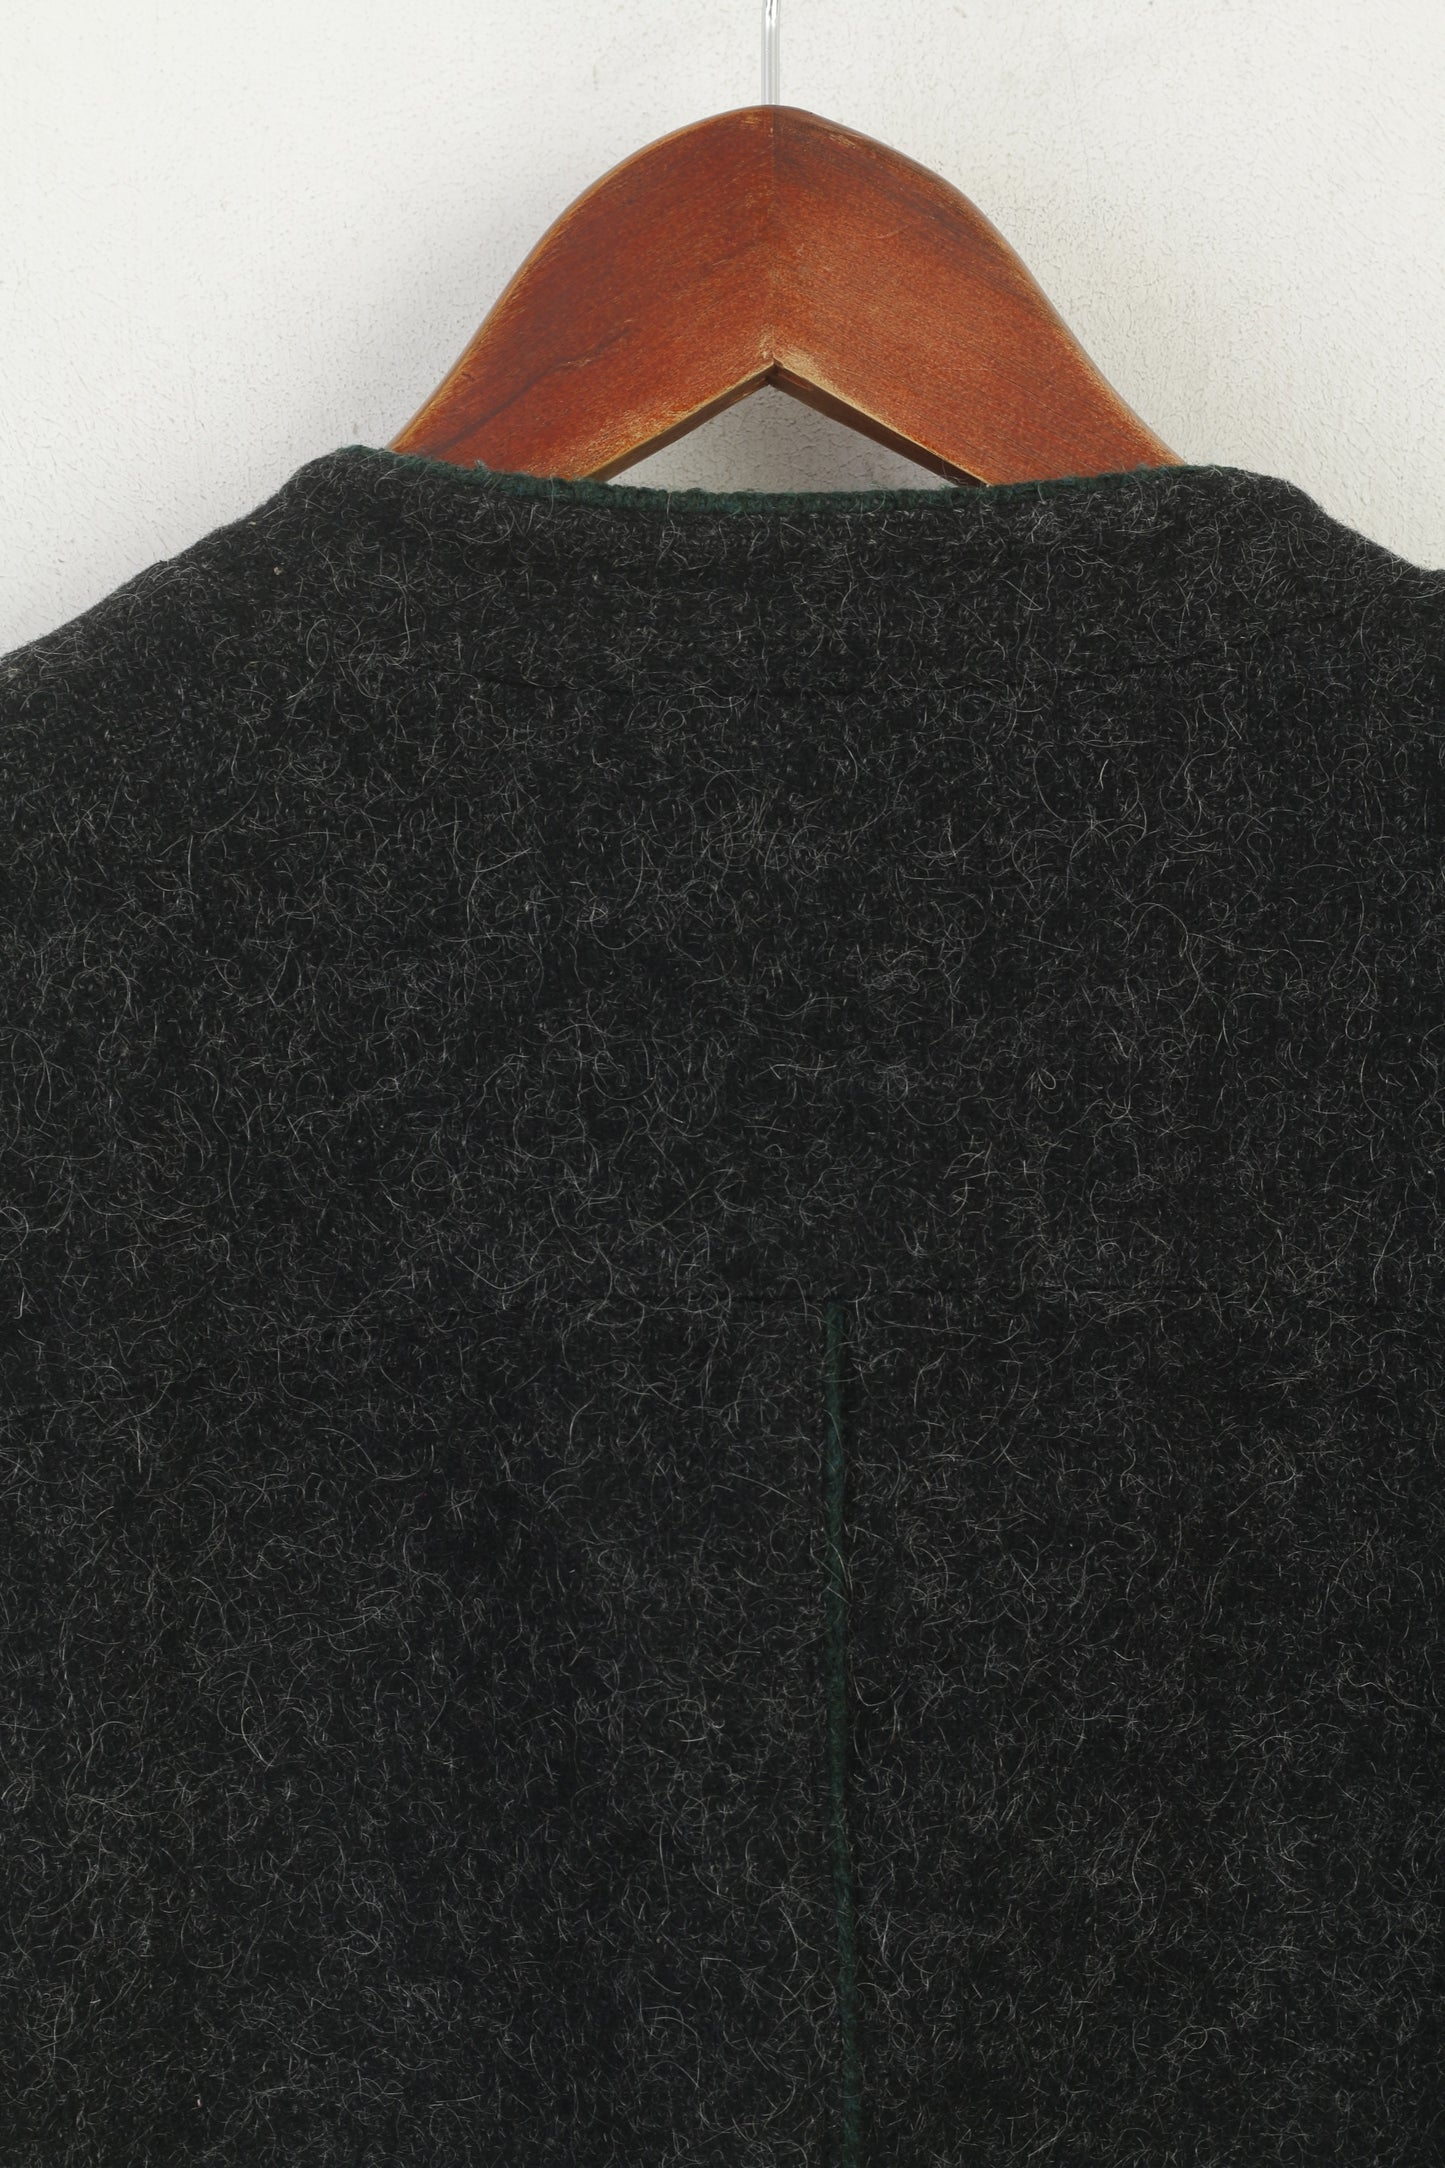 Alphorn Trachtenmode Women 40 M Blazer Gray Wool Tyrol Austria Cropped Jacket